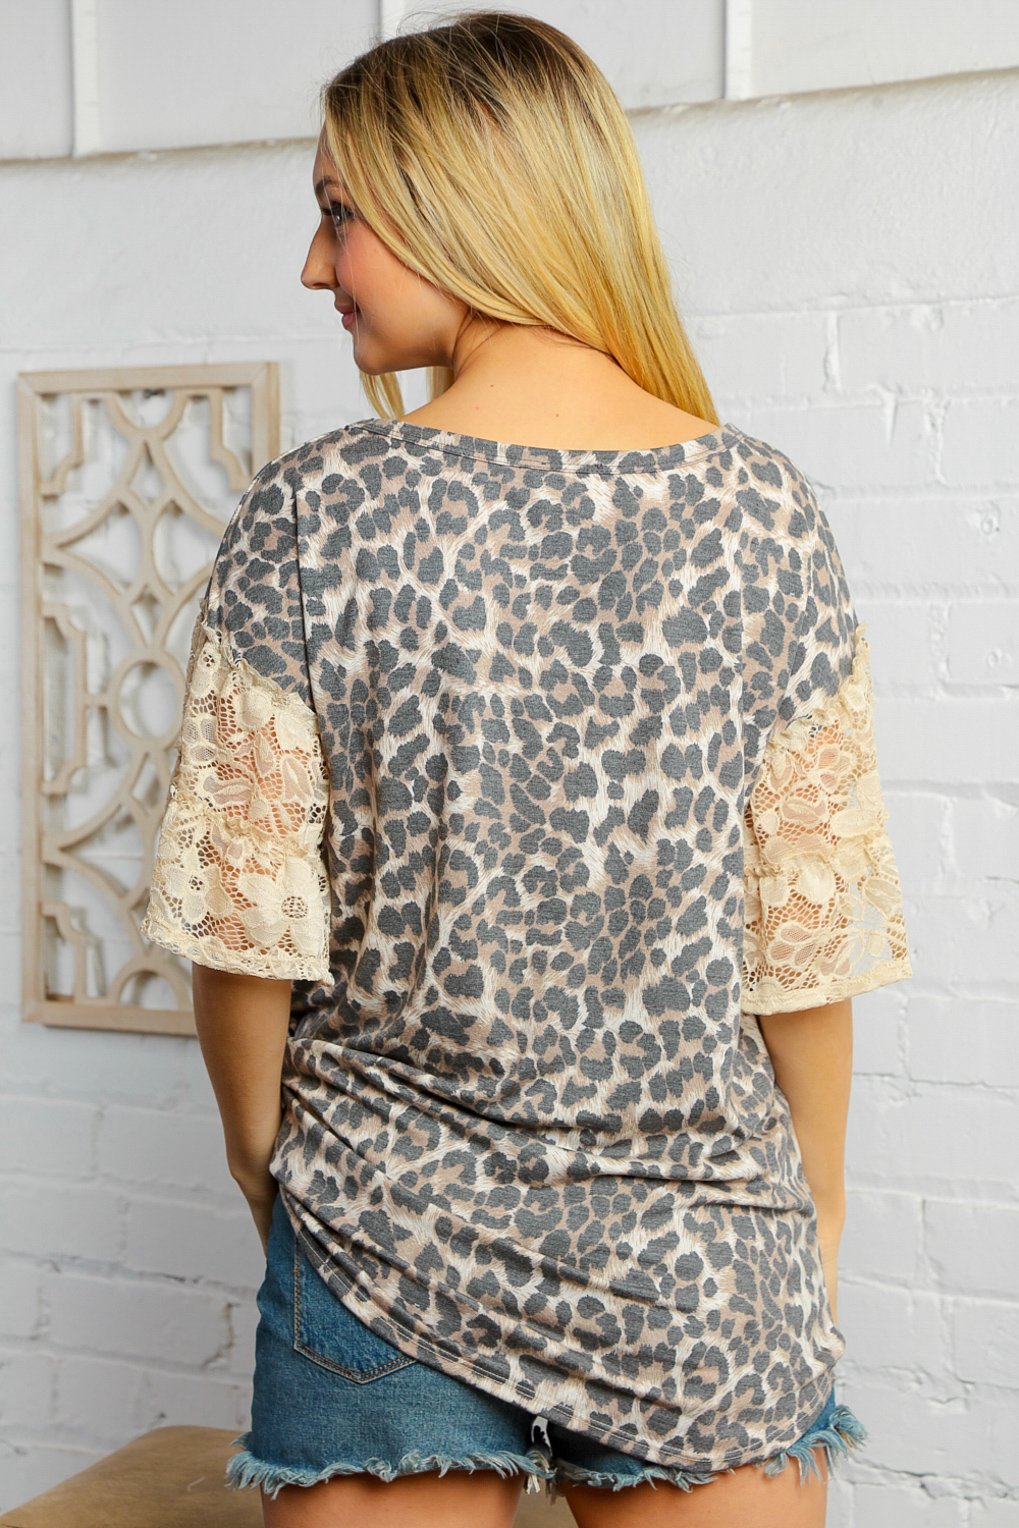 Leopard Print Ruffle Lace Sleeve Top